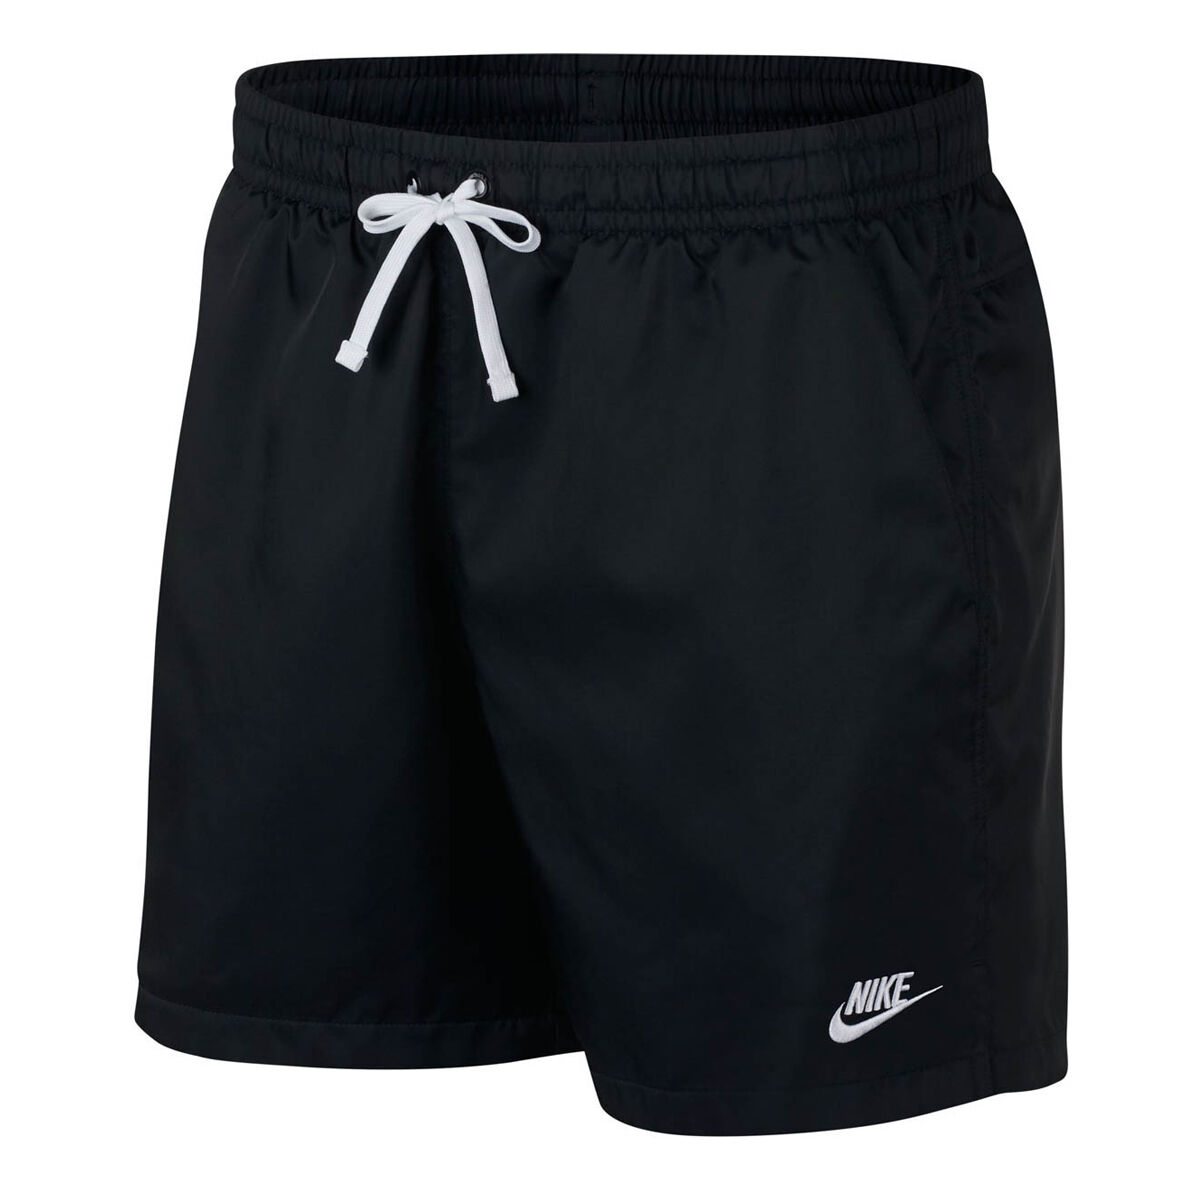 Finish Line Sport & Swimwear Sports Equipment Lightweight Running Sleeves in Black/Black Size S/M Nylon/Polyester 